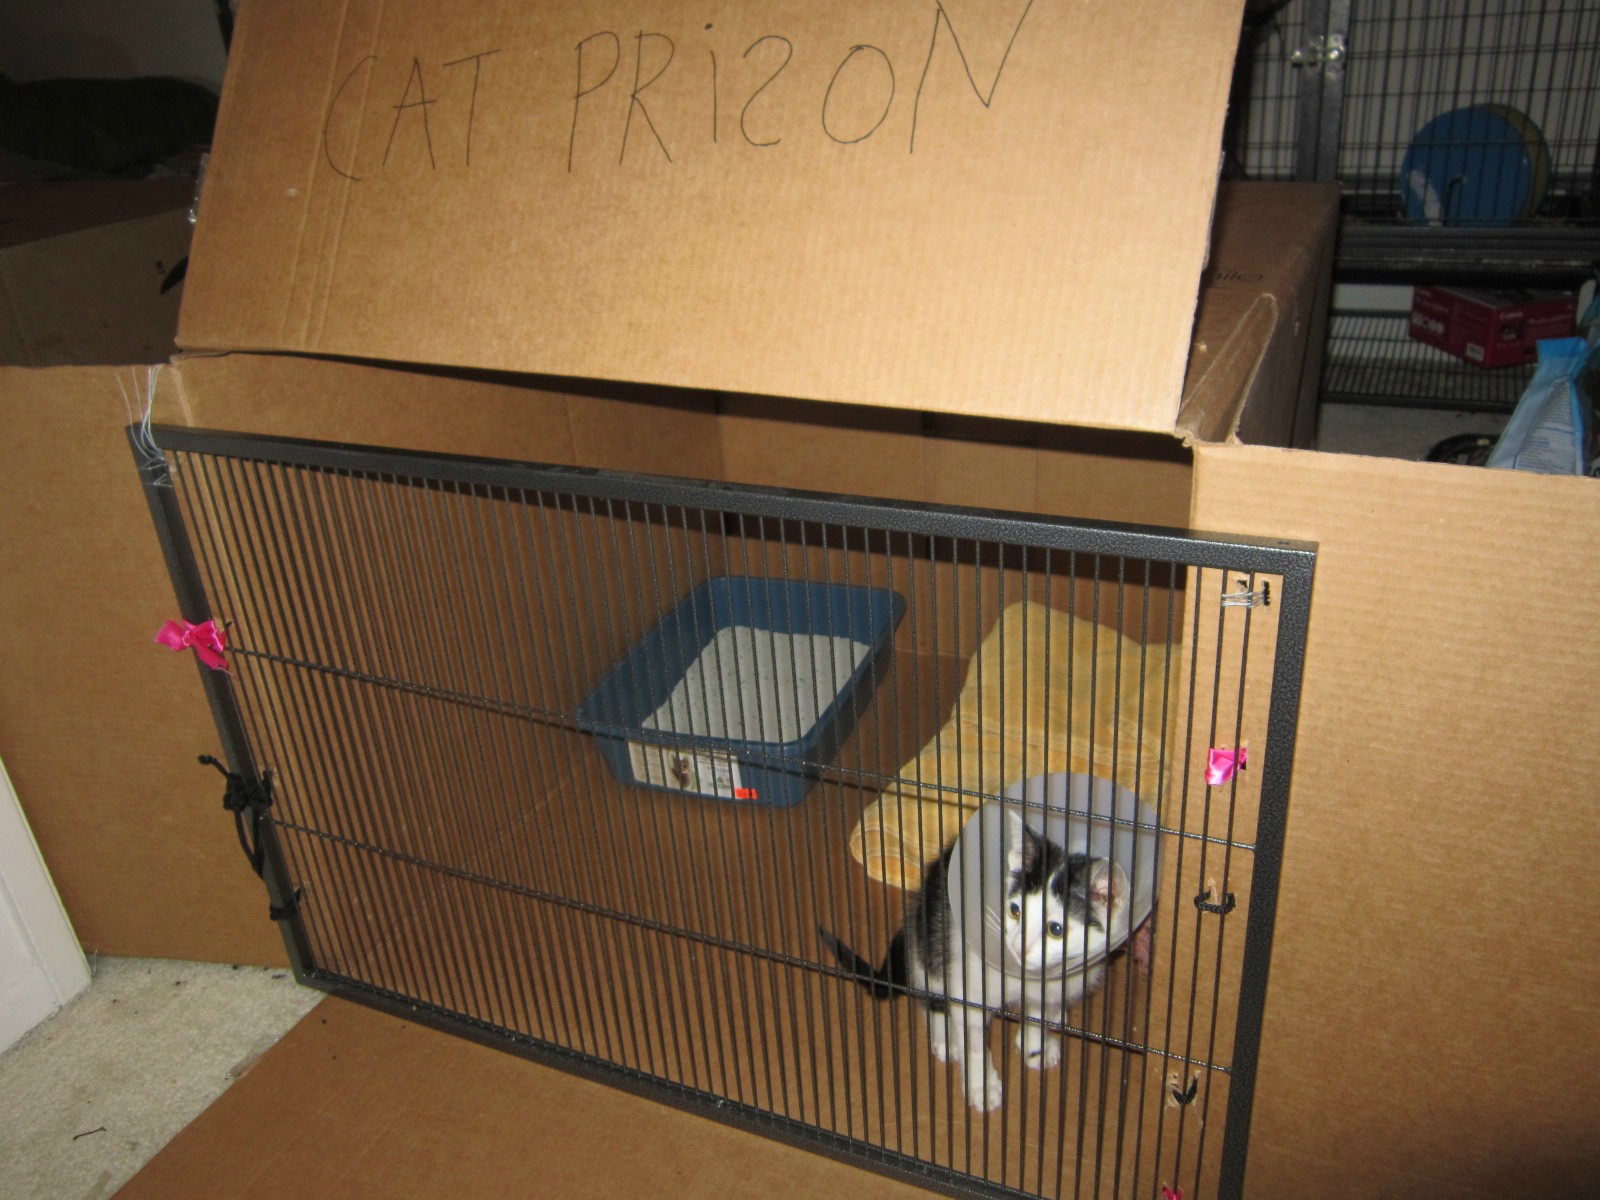 cat_prison.jpg